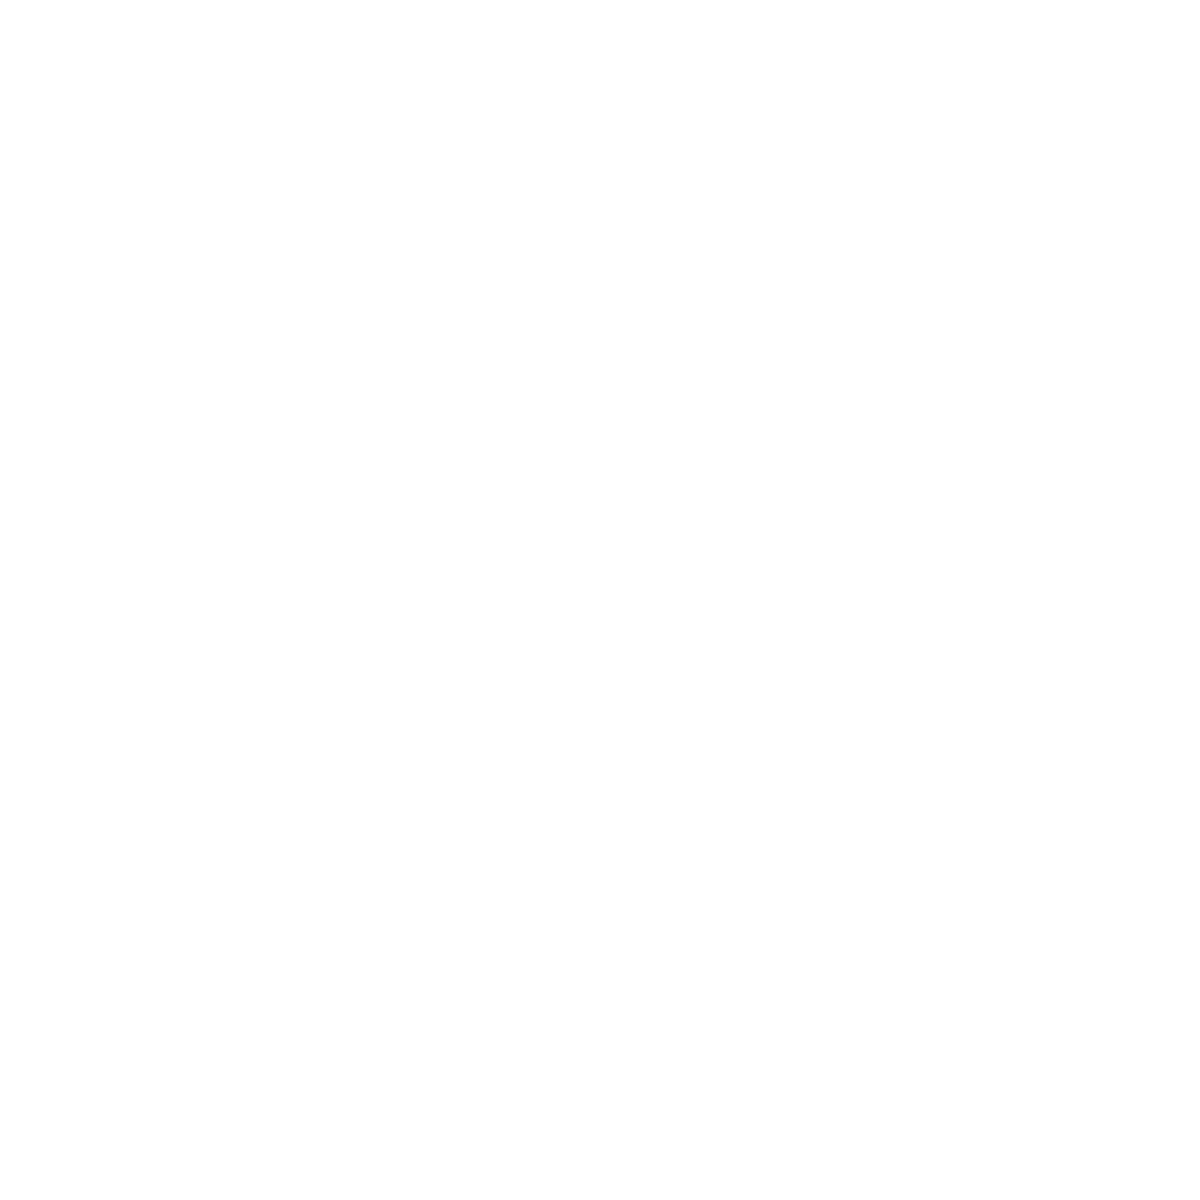 Vassar Logo